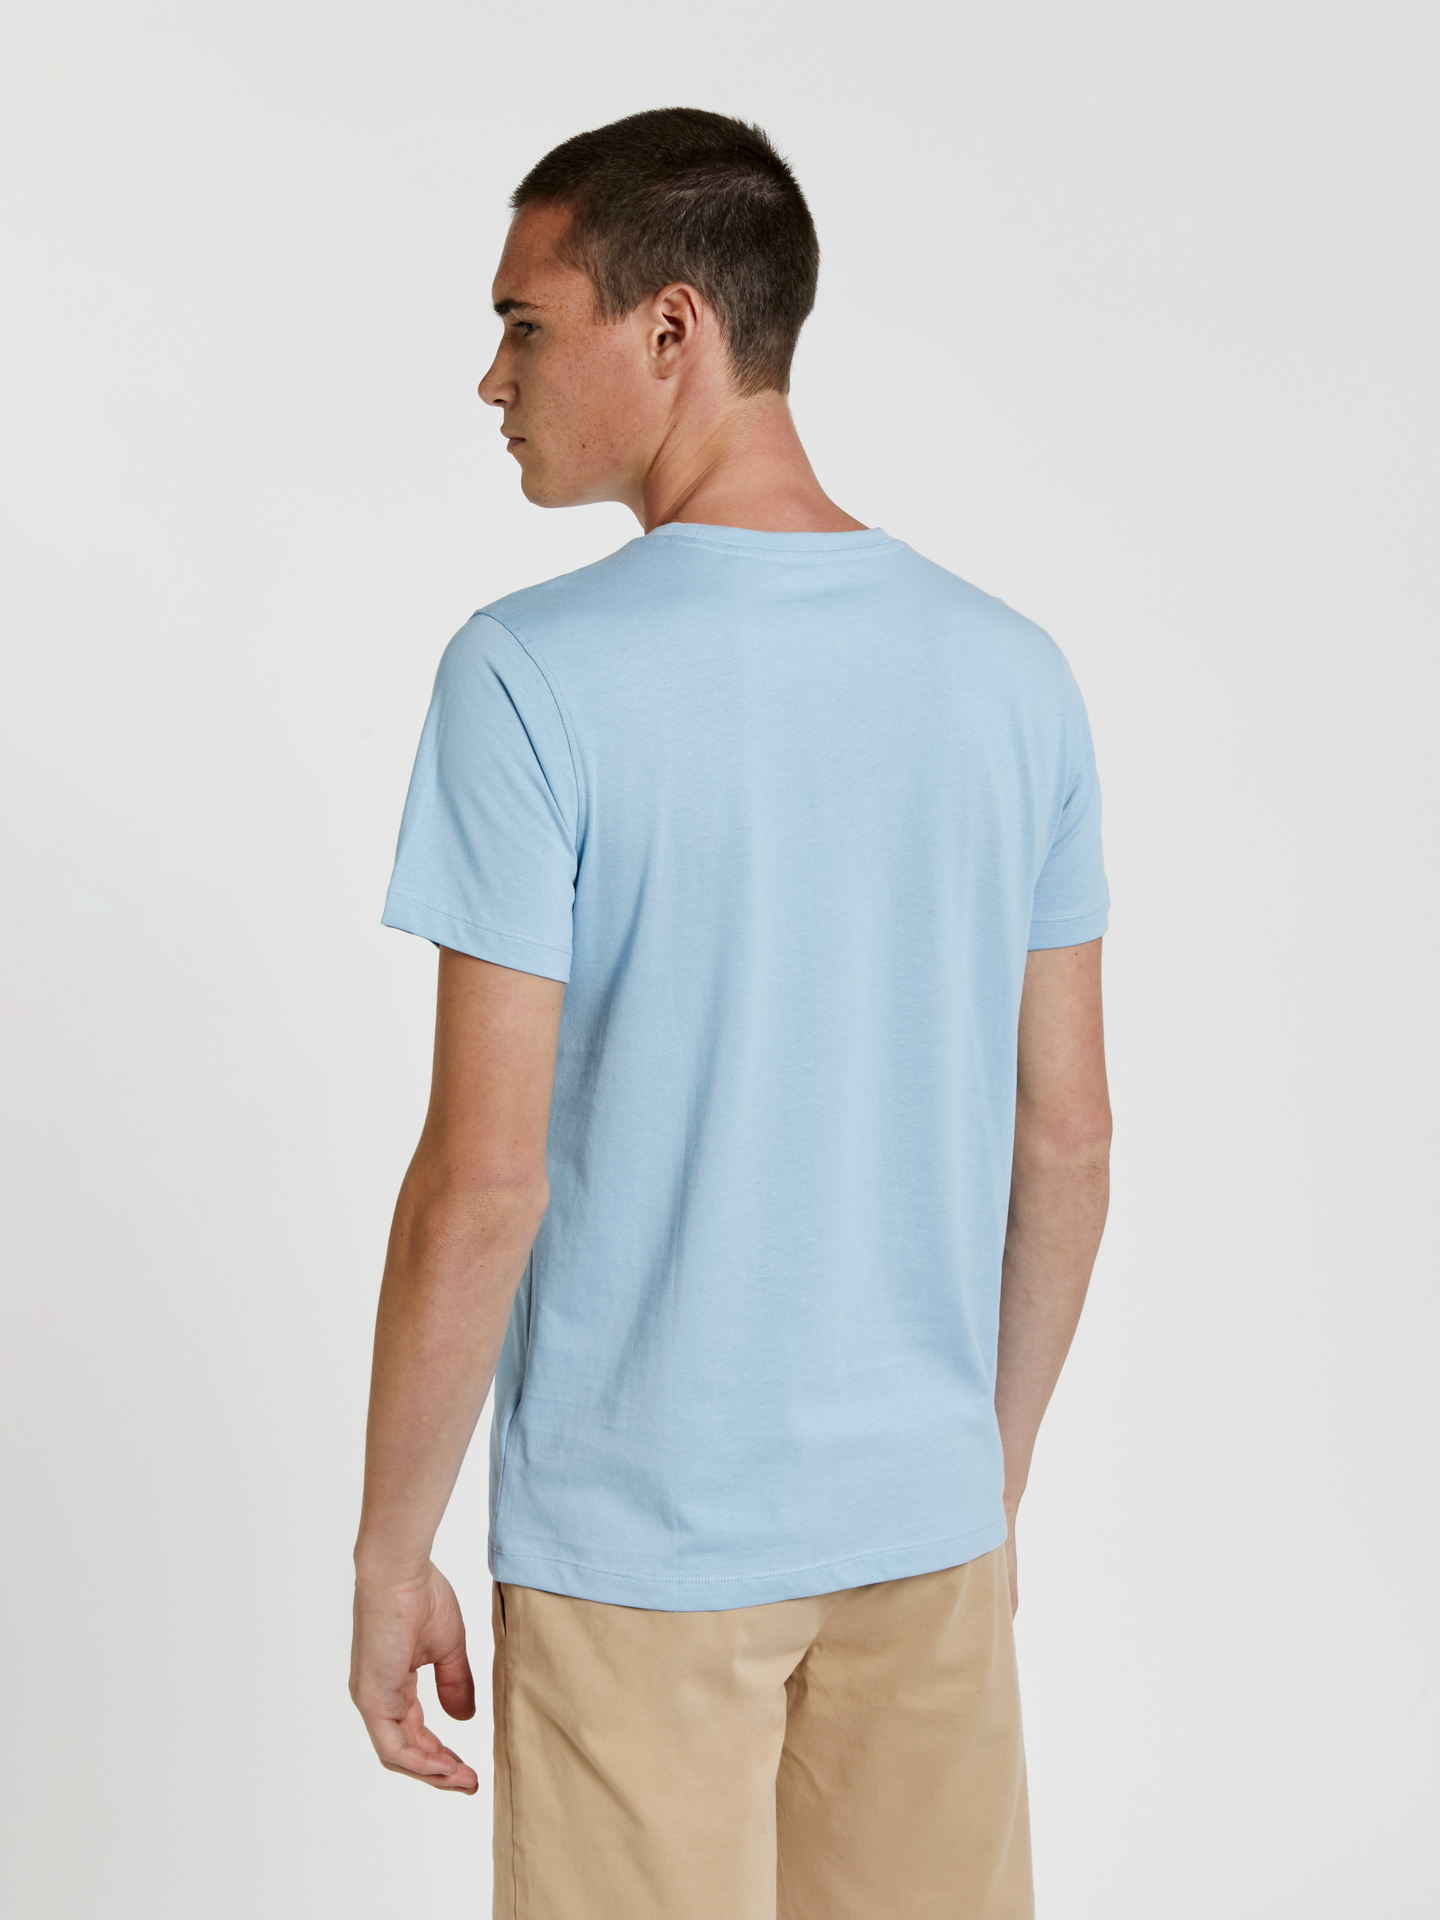 T-Shirt Azul Claro Casual Homem